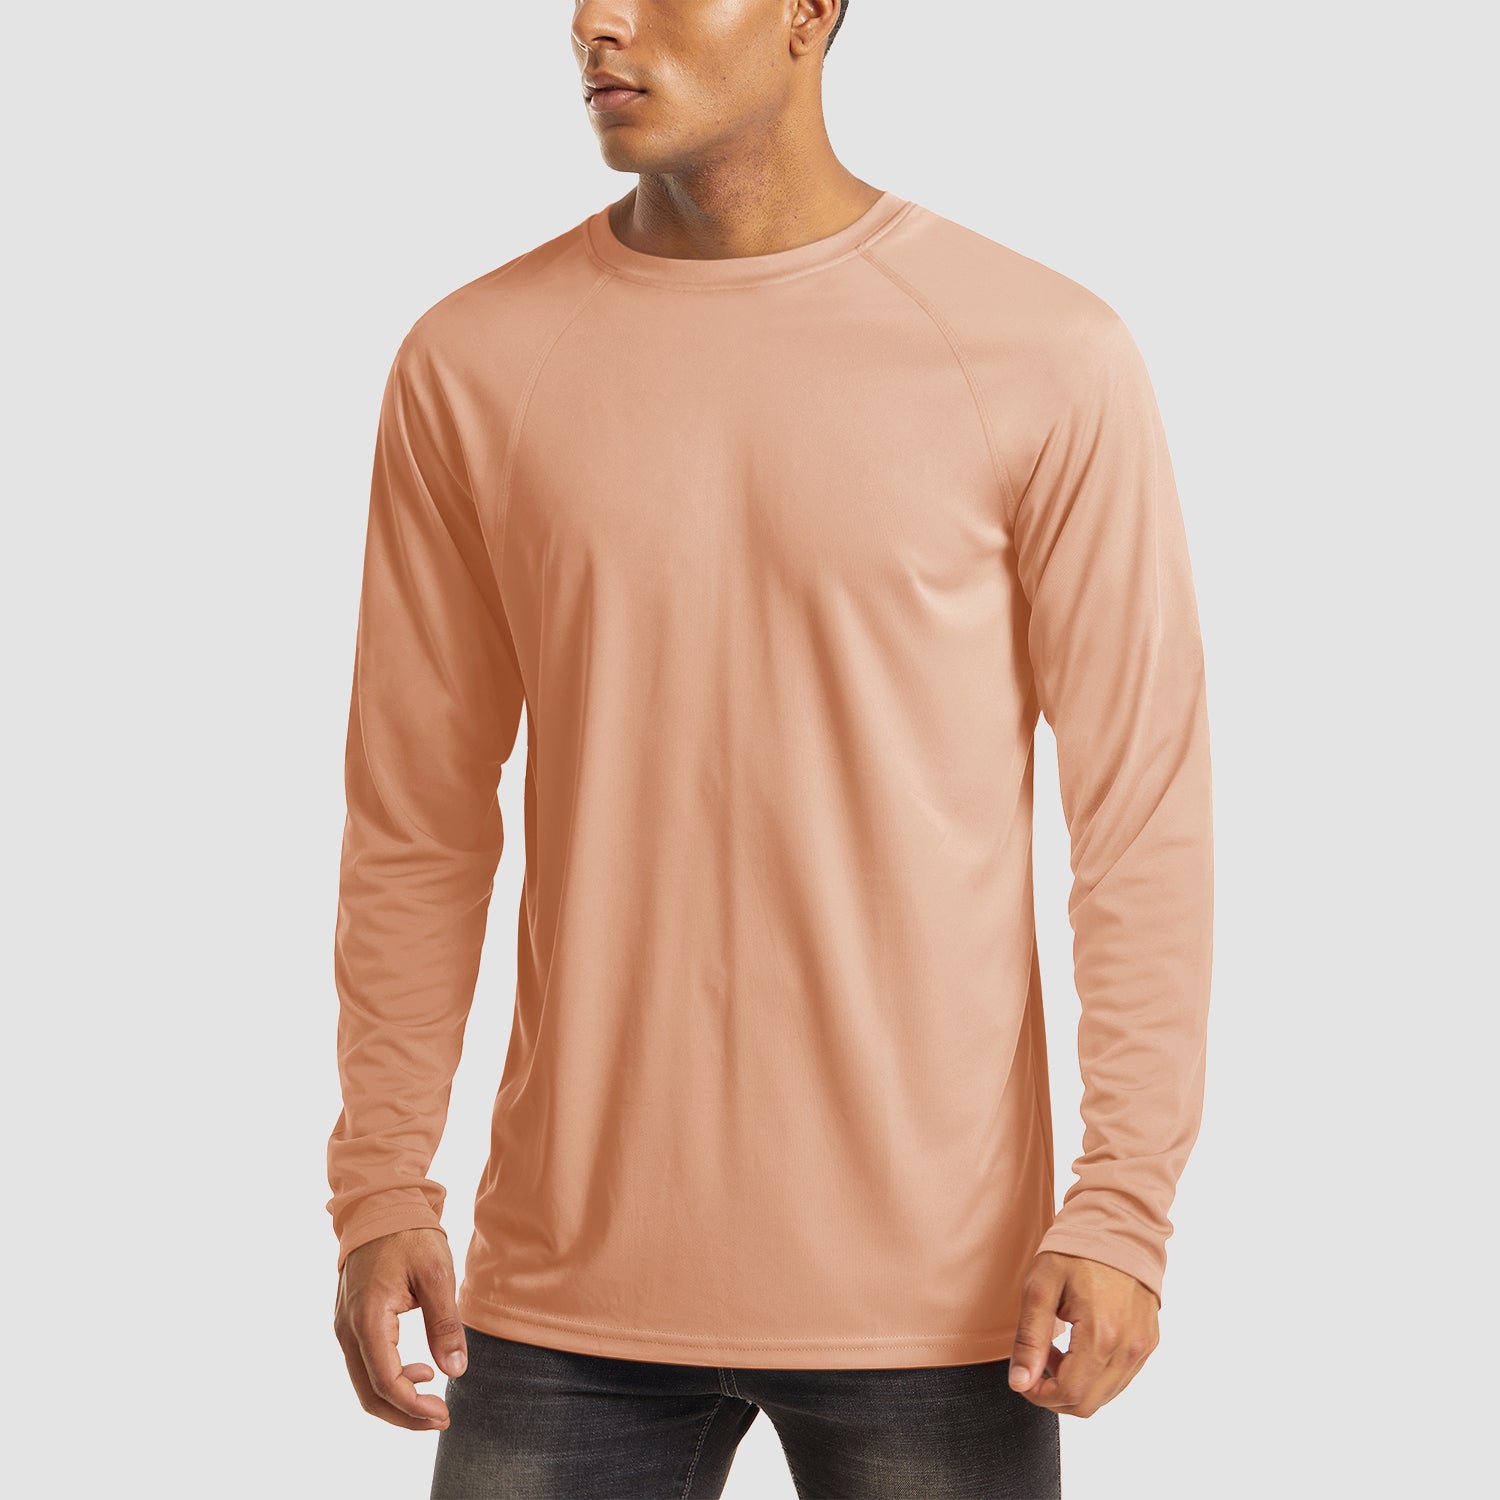 Buy 4 Get 4th Free】Men's Long Sleeve Hooded Shirt UPF 50+ Athletic Sh –  MAGCOMSEN